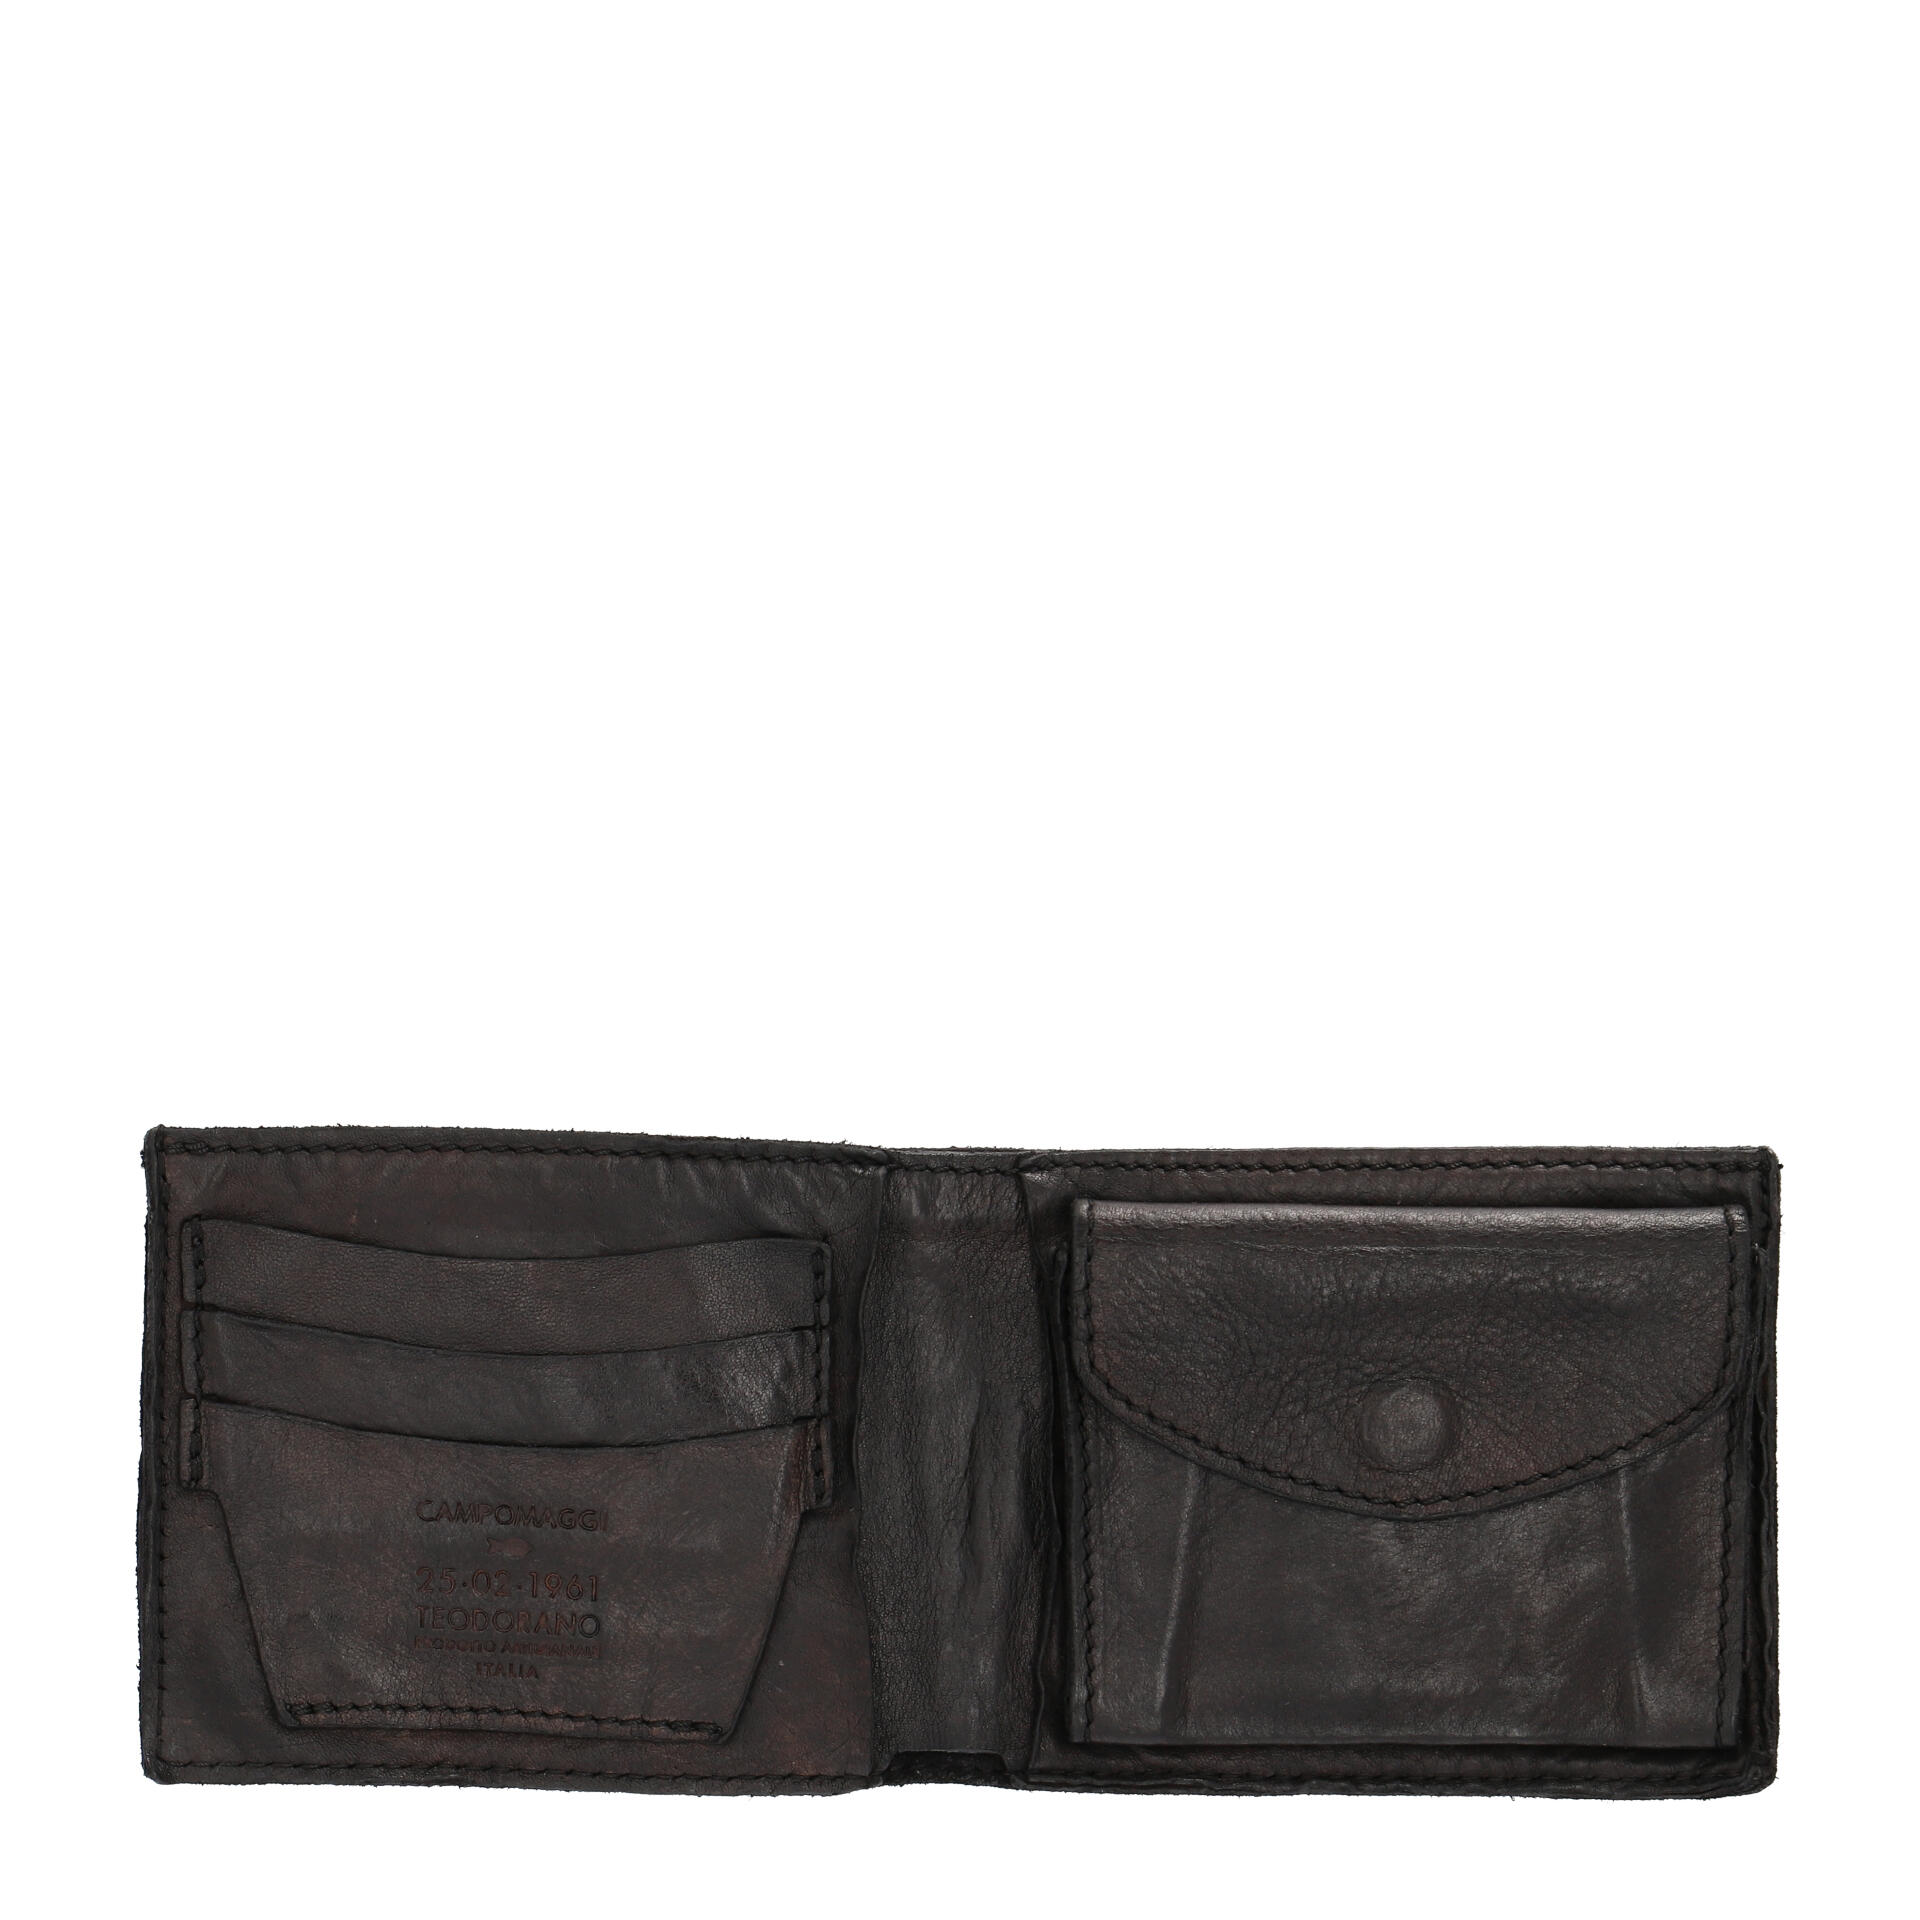 Campomaggi Carry Over Geldbörse aus Leder black